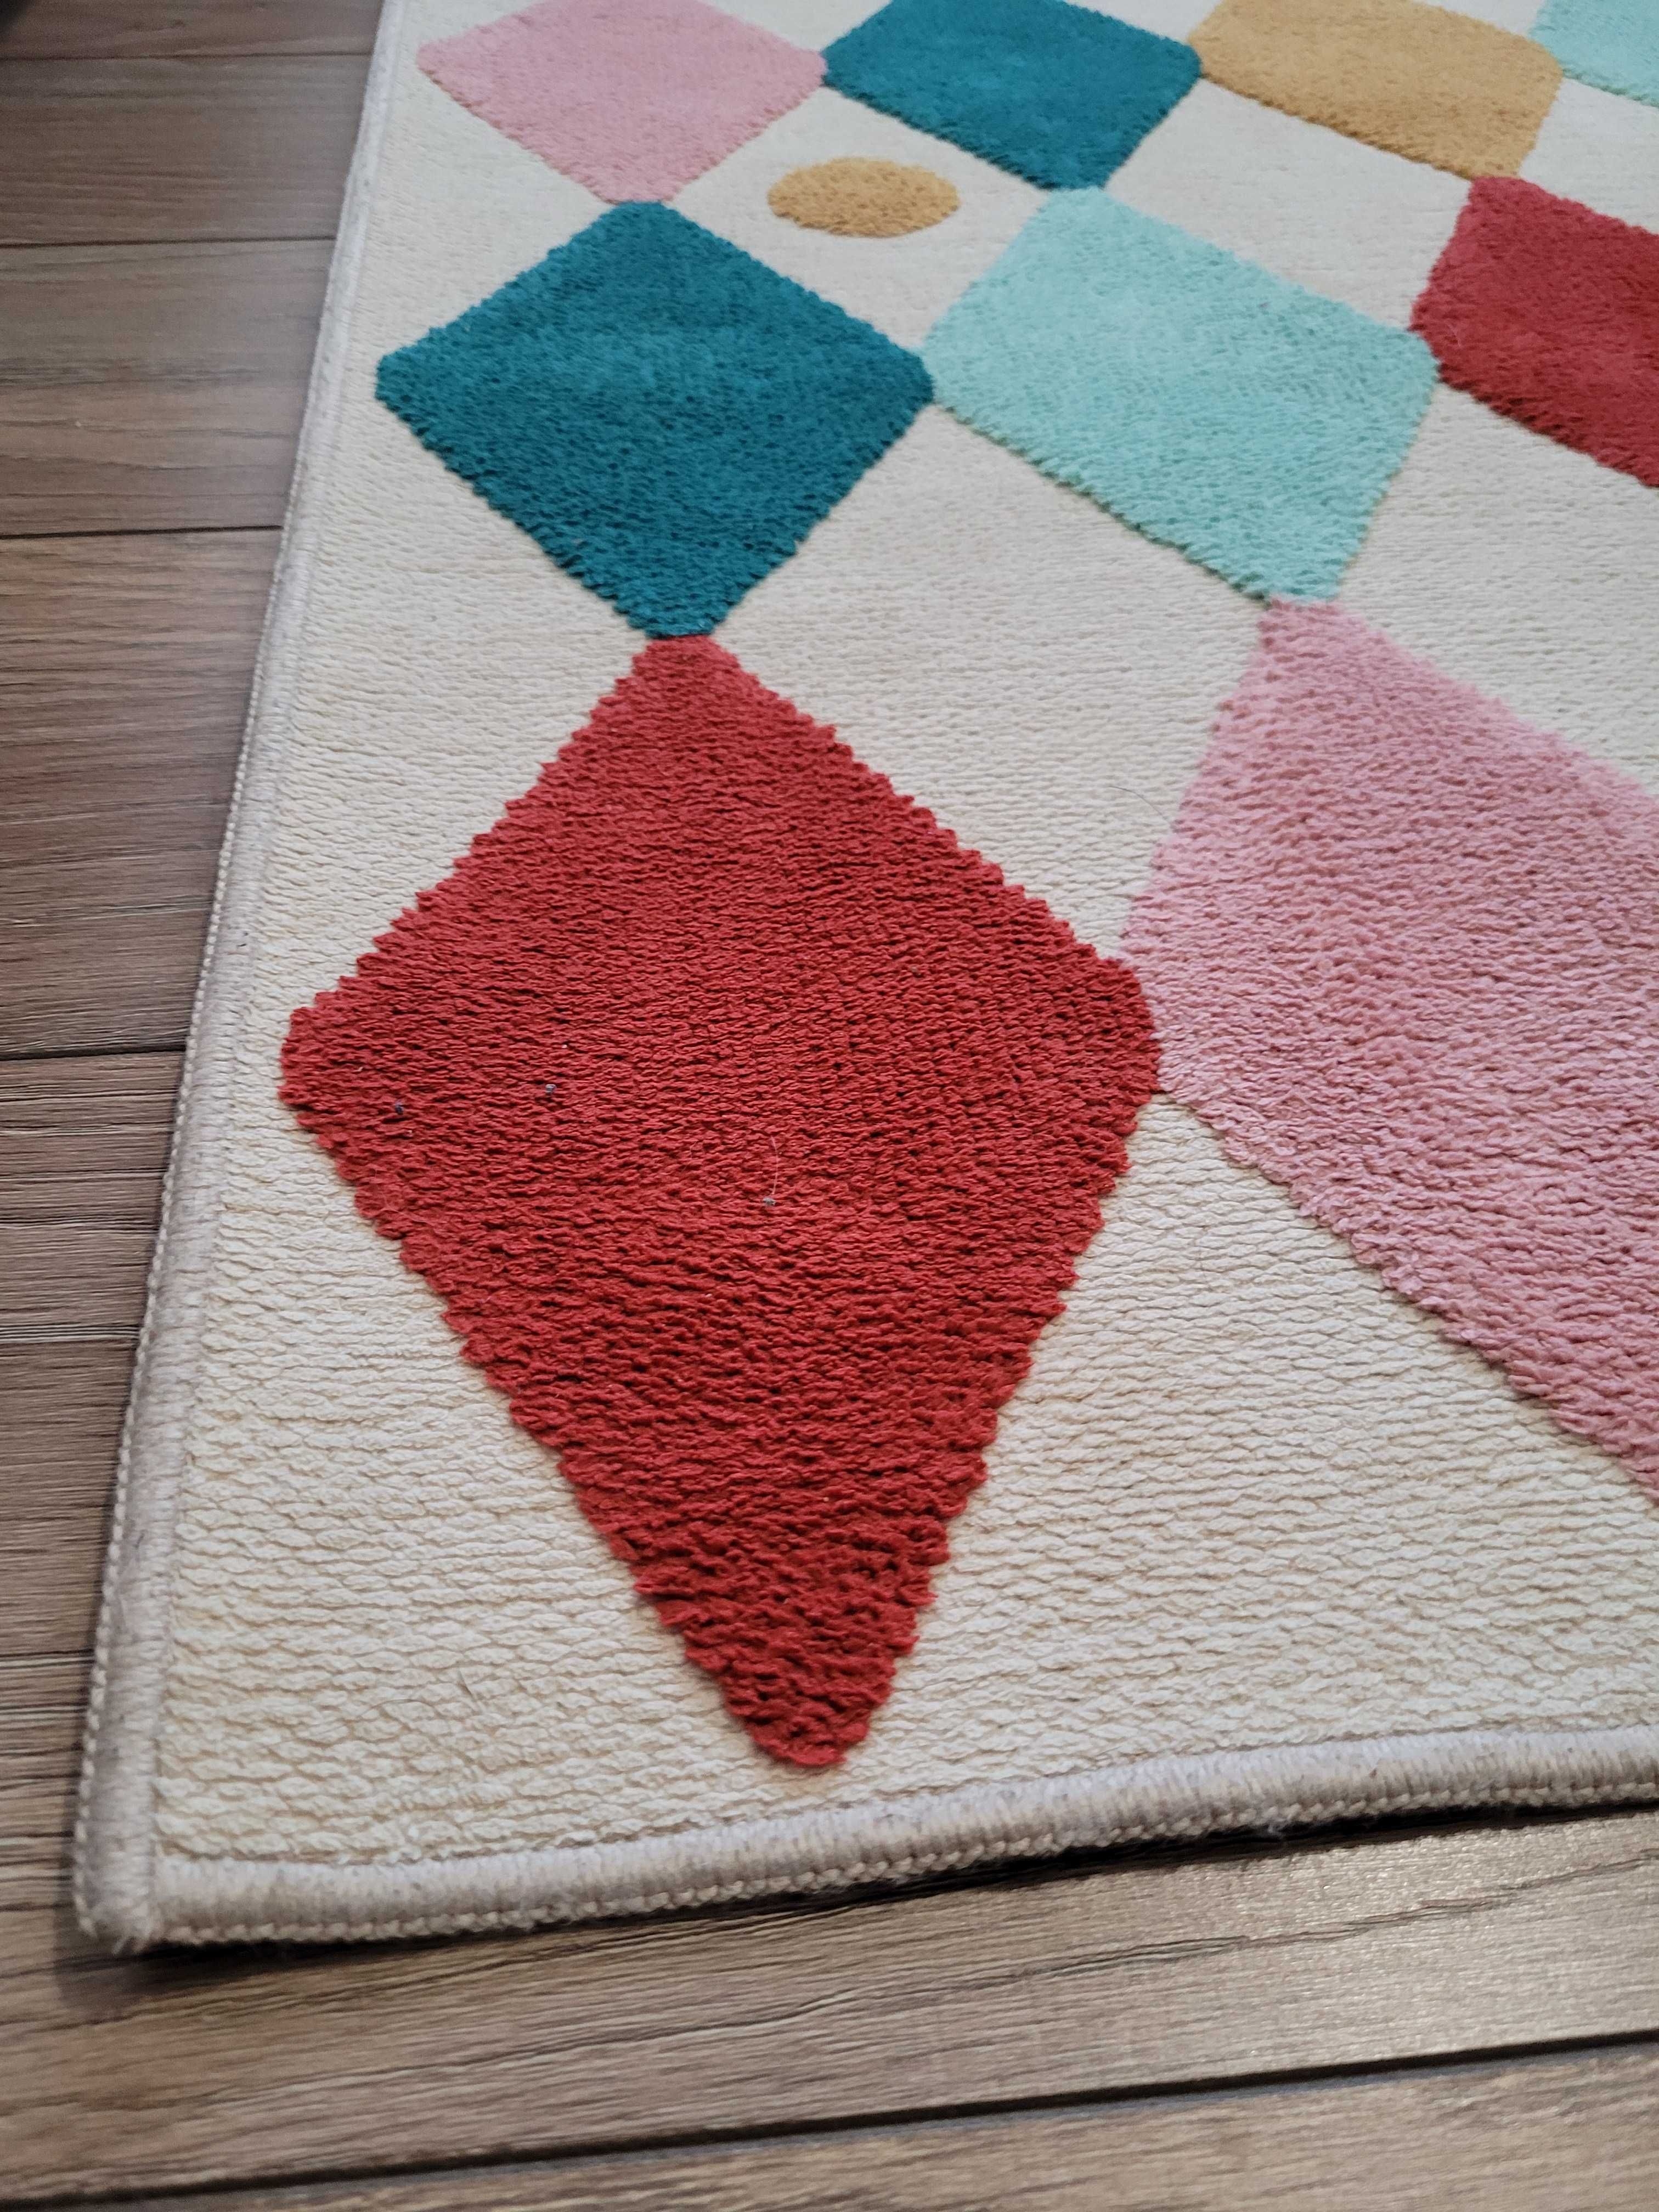 Kolorowy dywan dla dziecka